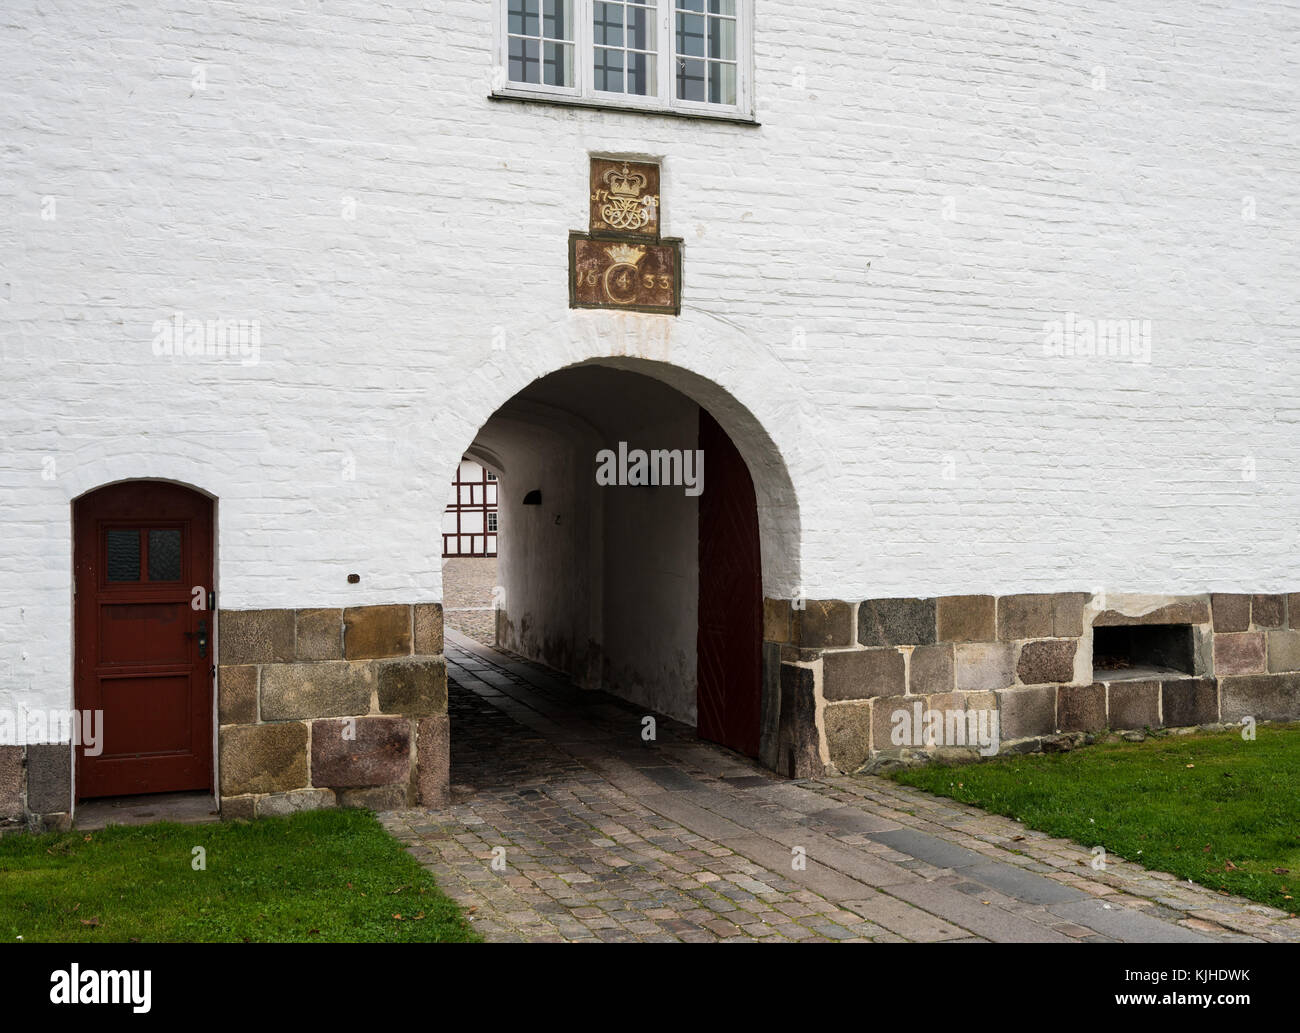 Aalborghus Castle in Aalborg, Denmark Stock Photo